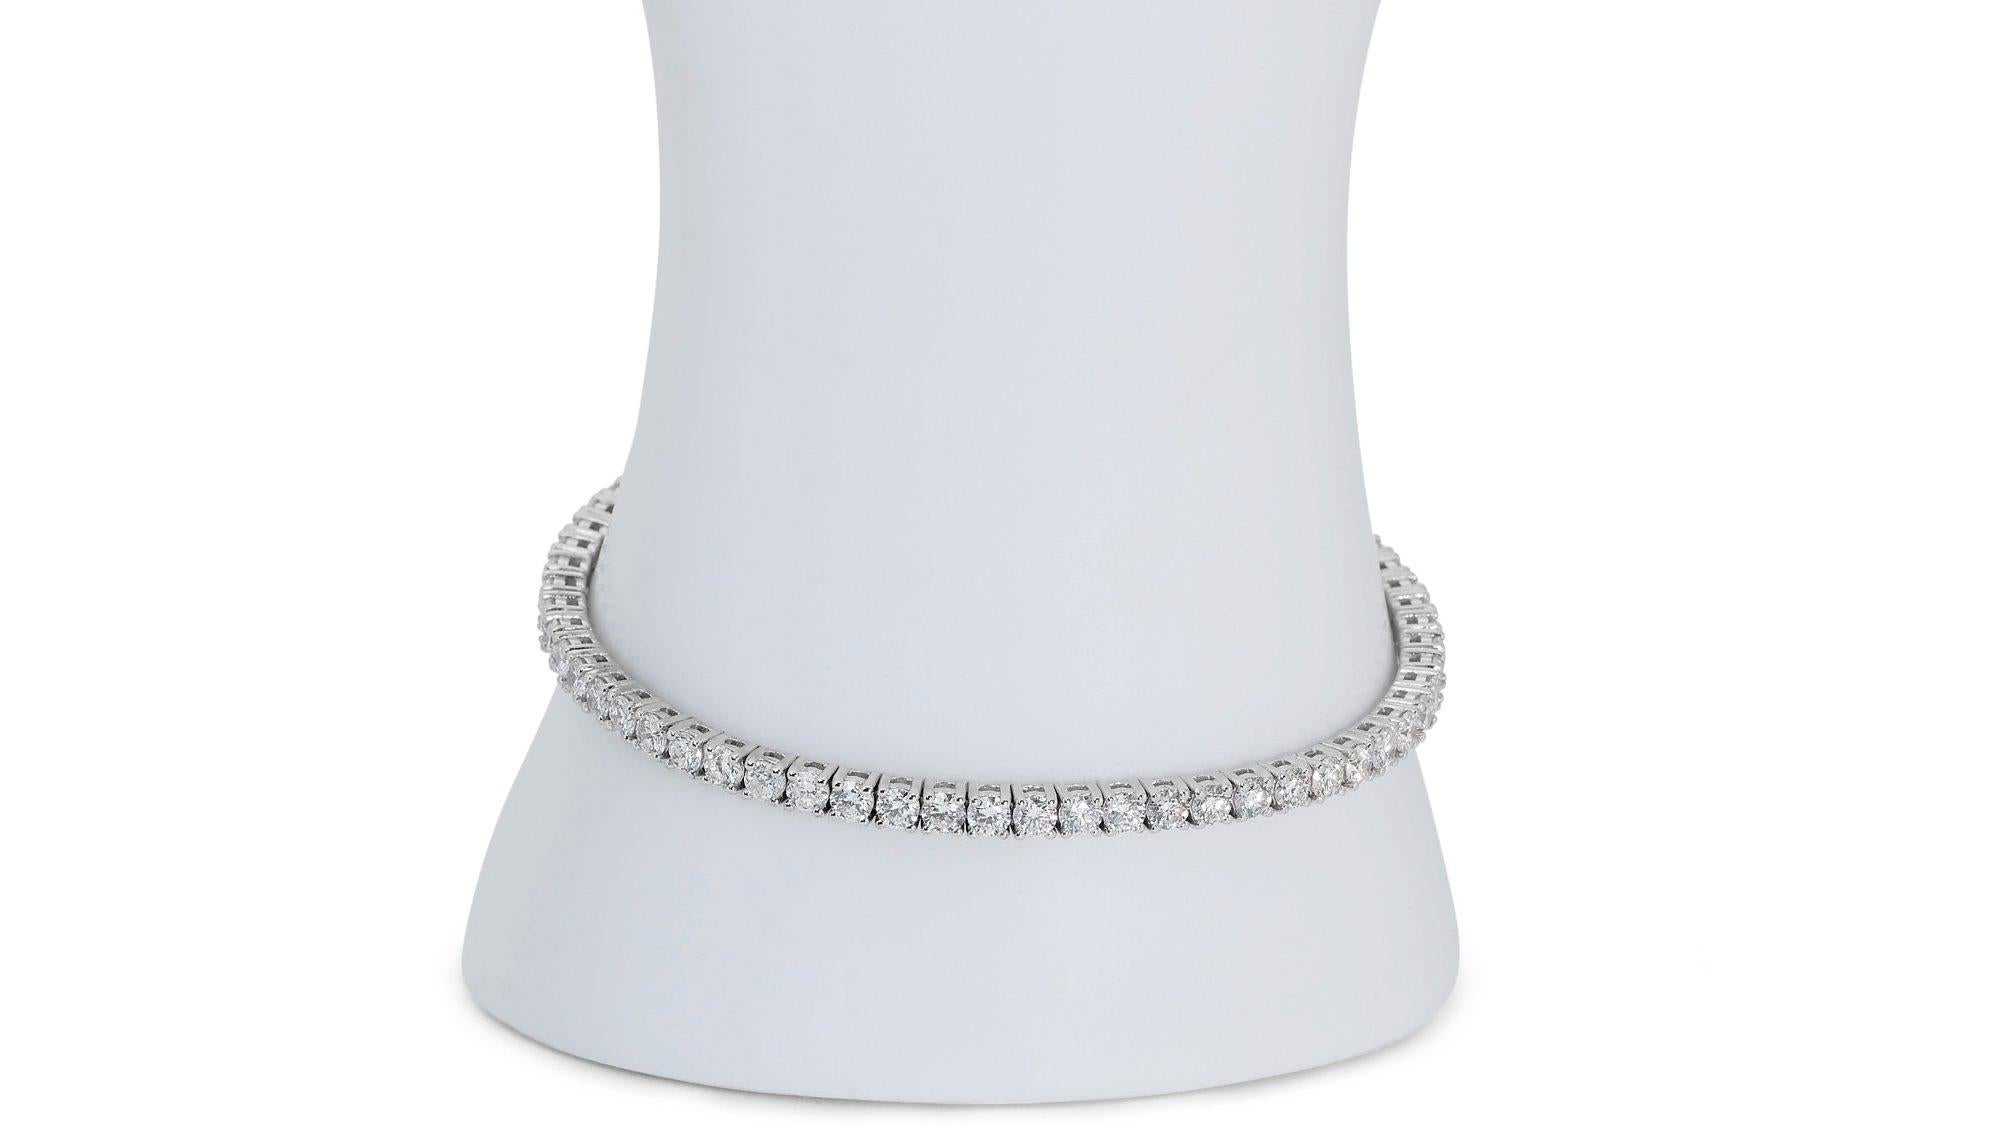 Ravishing 18k White Gold Bracelet w/ 6.02 ct Natural Diamonds IGI Certificate For Sale 1